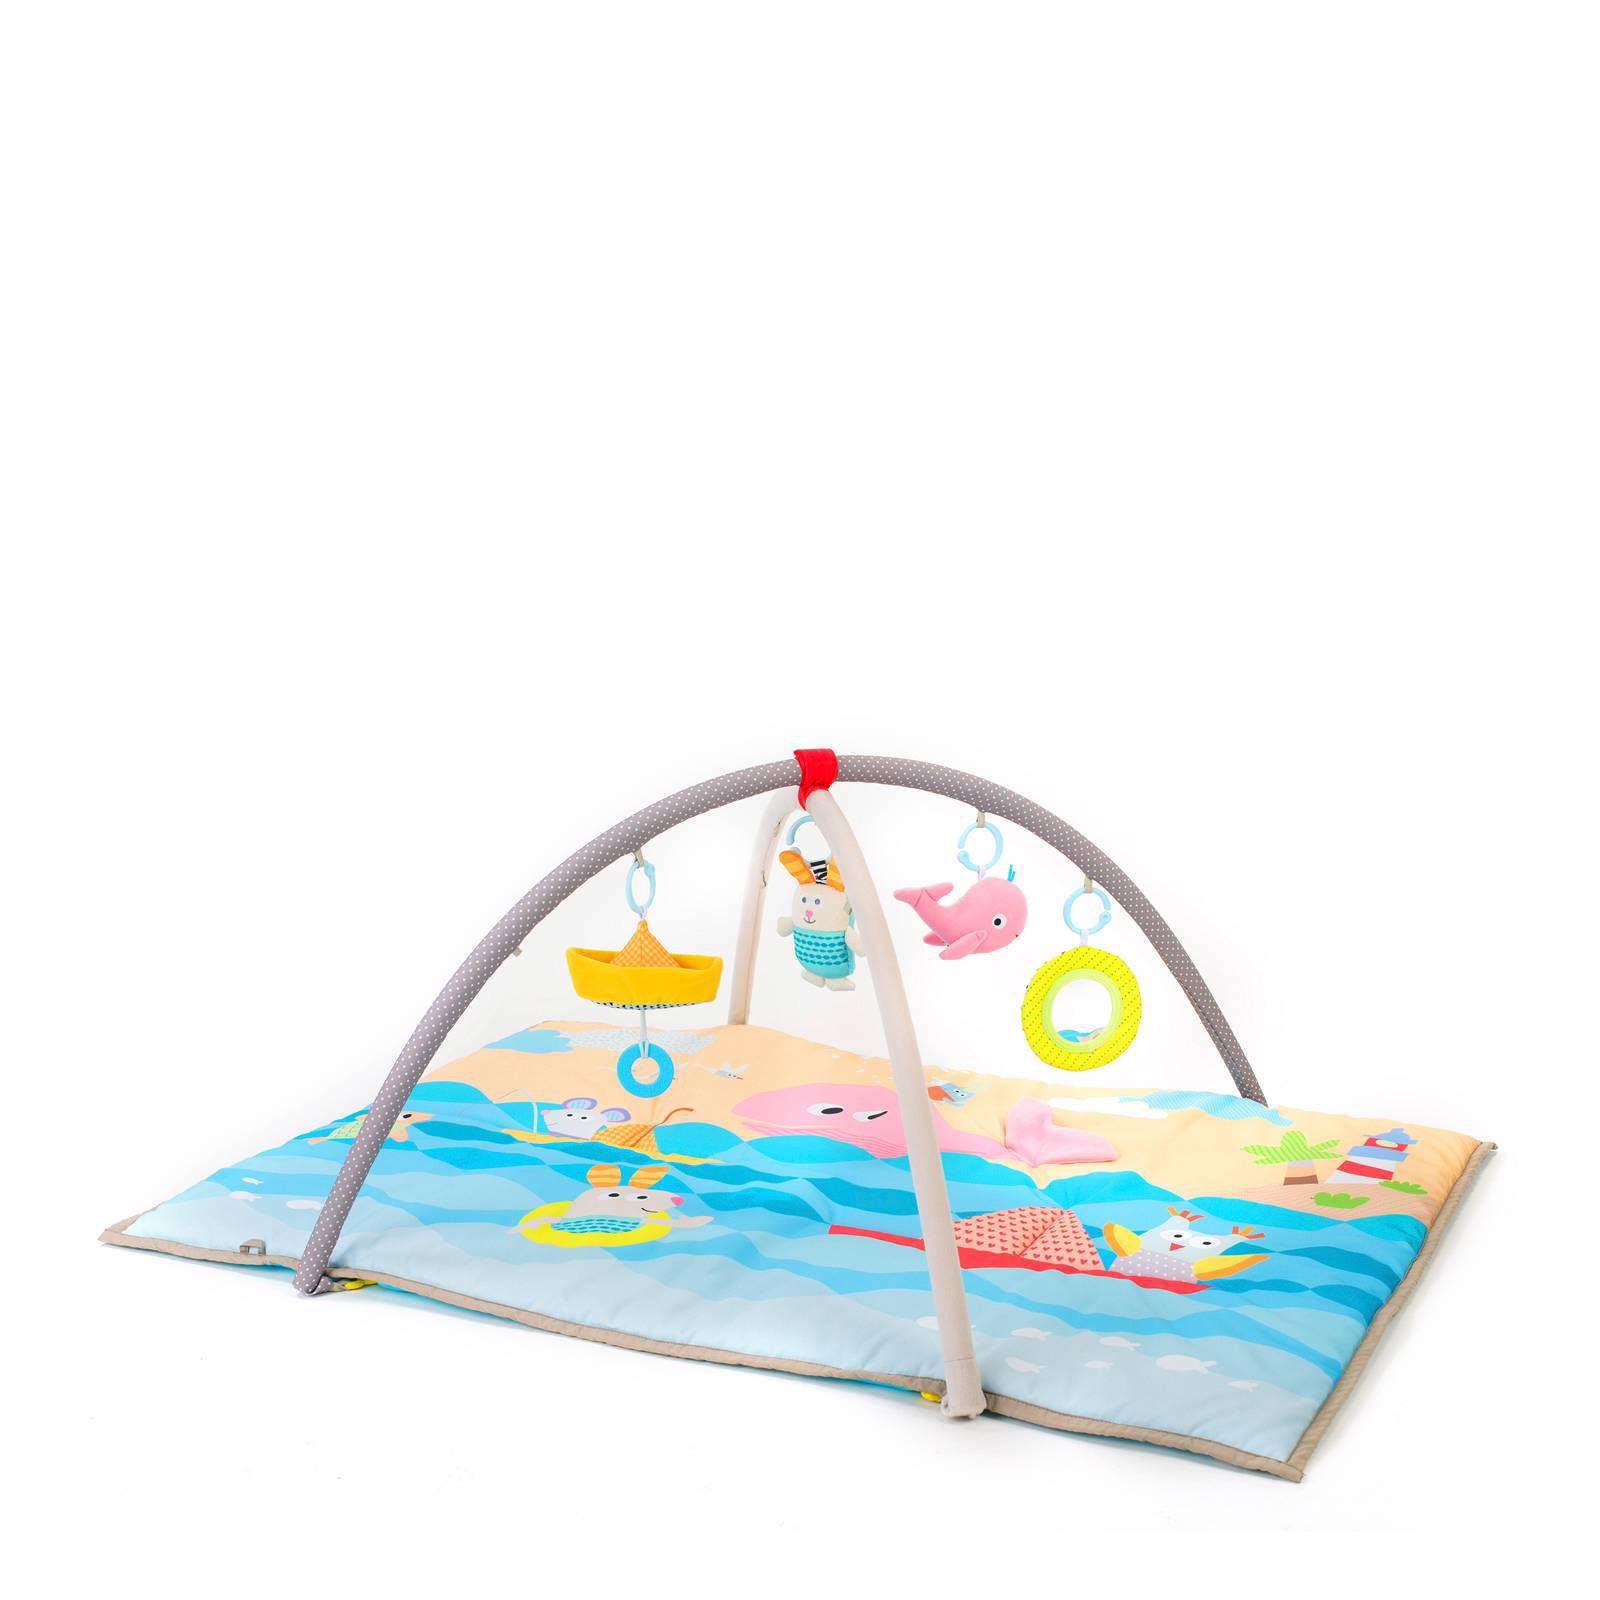 Taf Toys Speelkleed Seaside Pals 135x90x50 cm 11935 online kopen